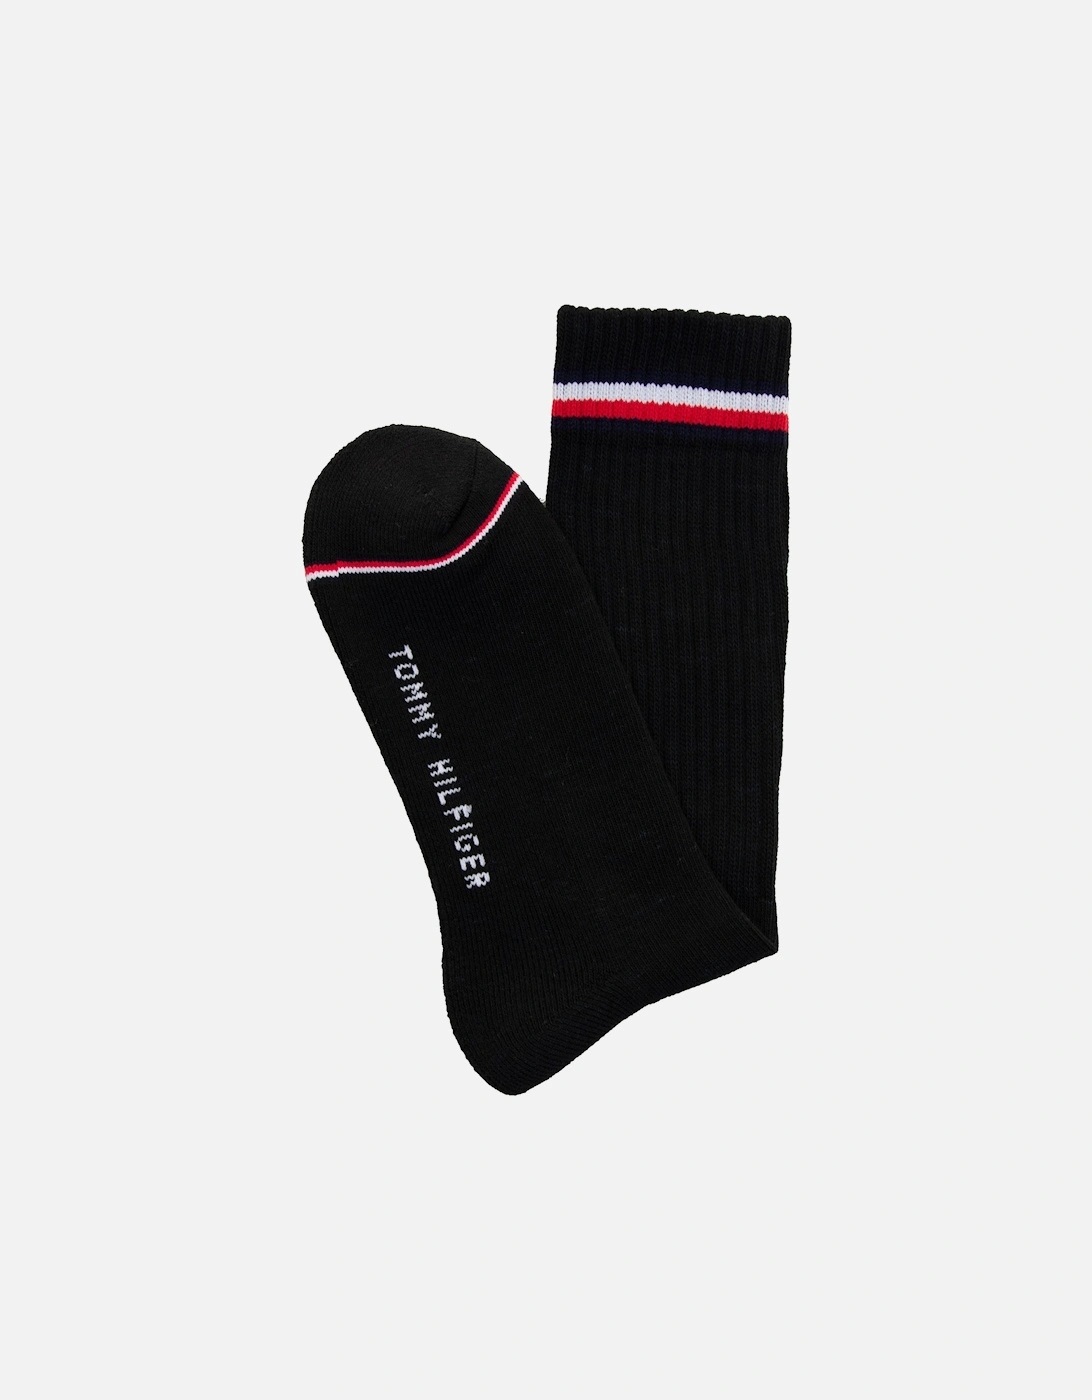 Mens Iconic Socks (Black)